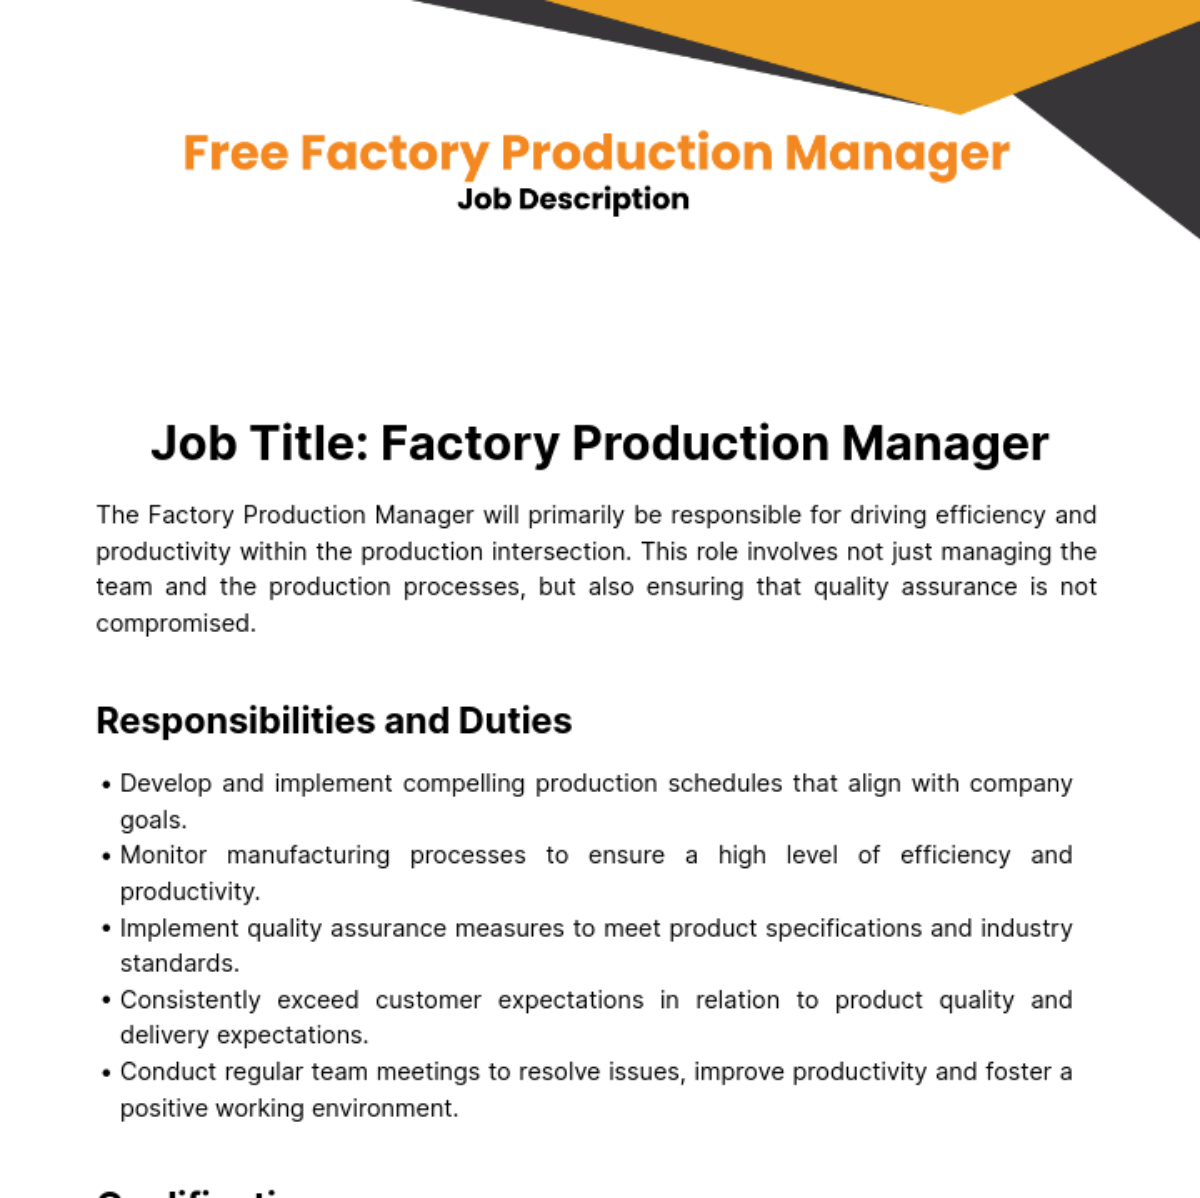 Free Factory Production Manager Job Description Template